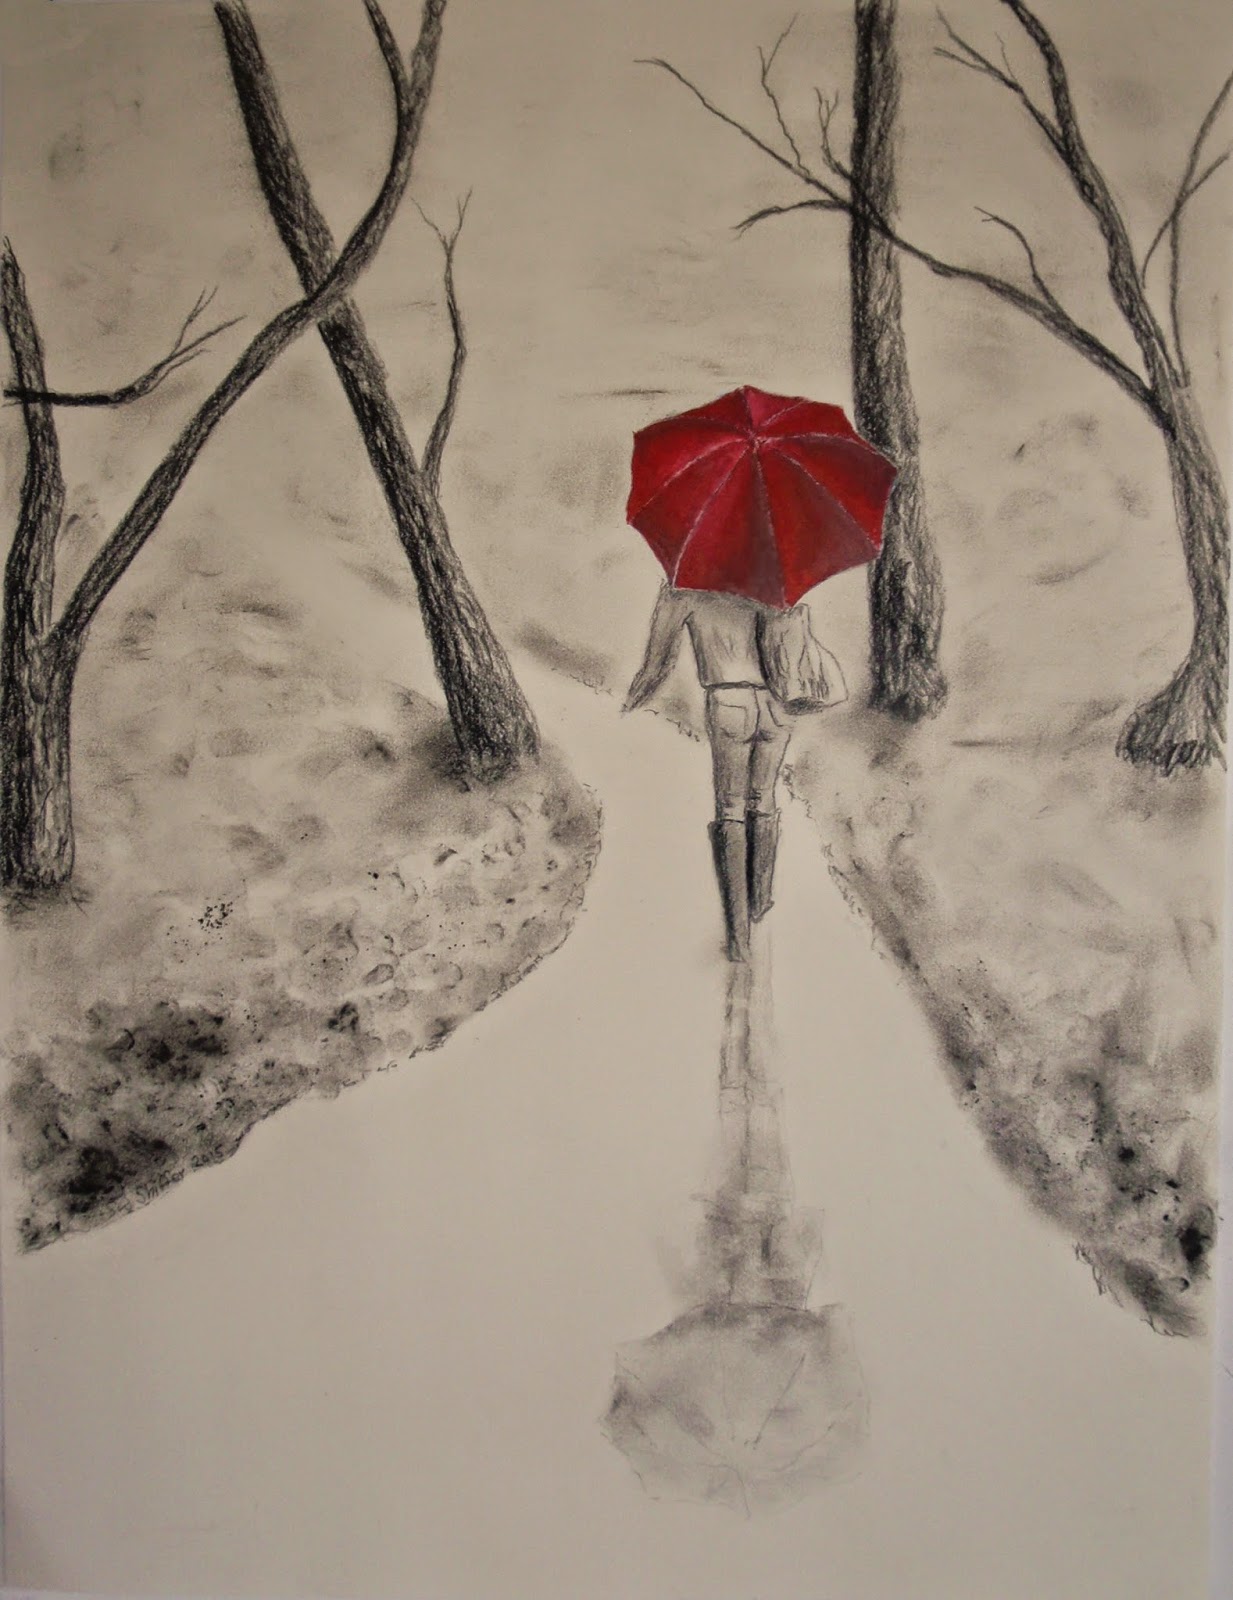 umbrella drawing sketch